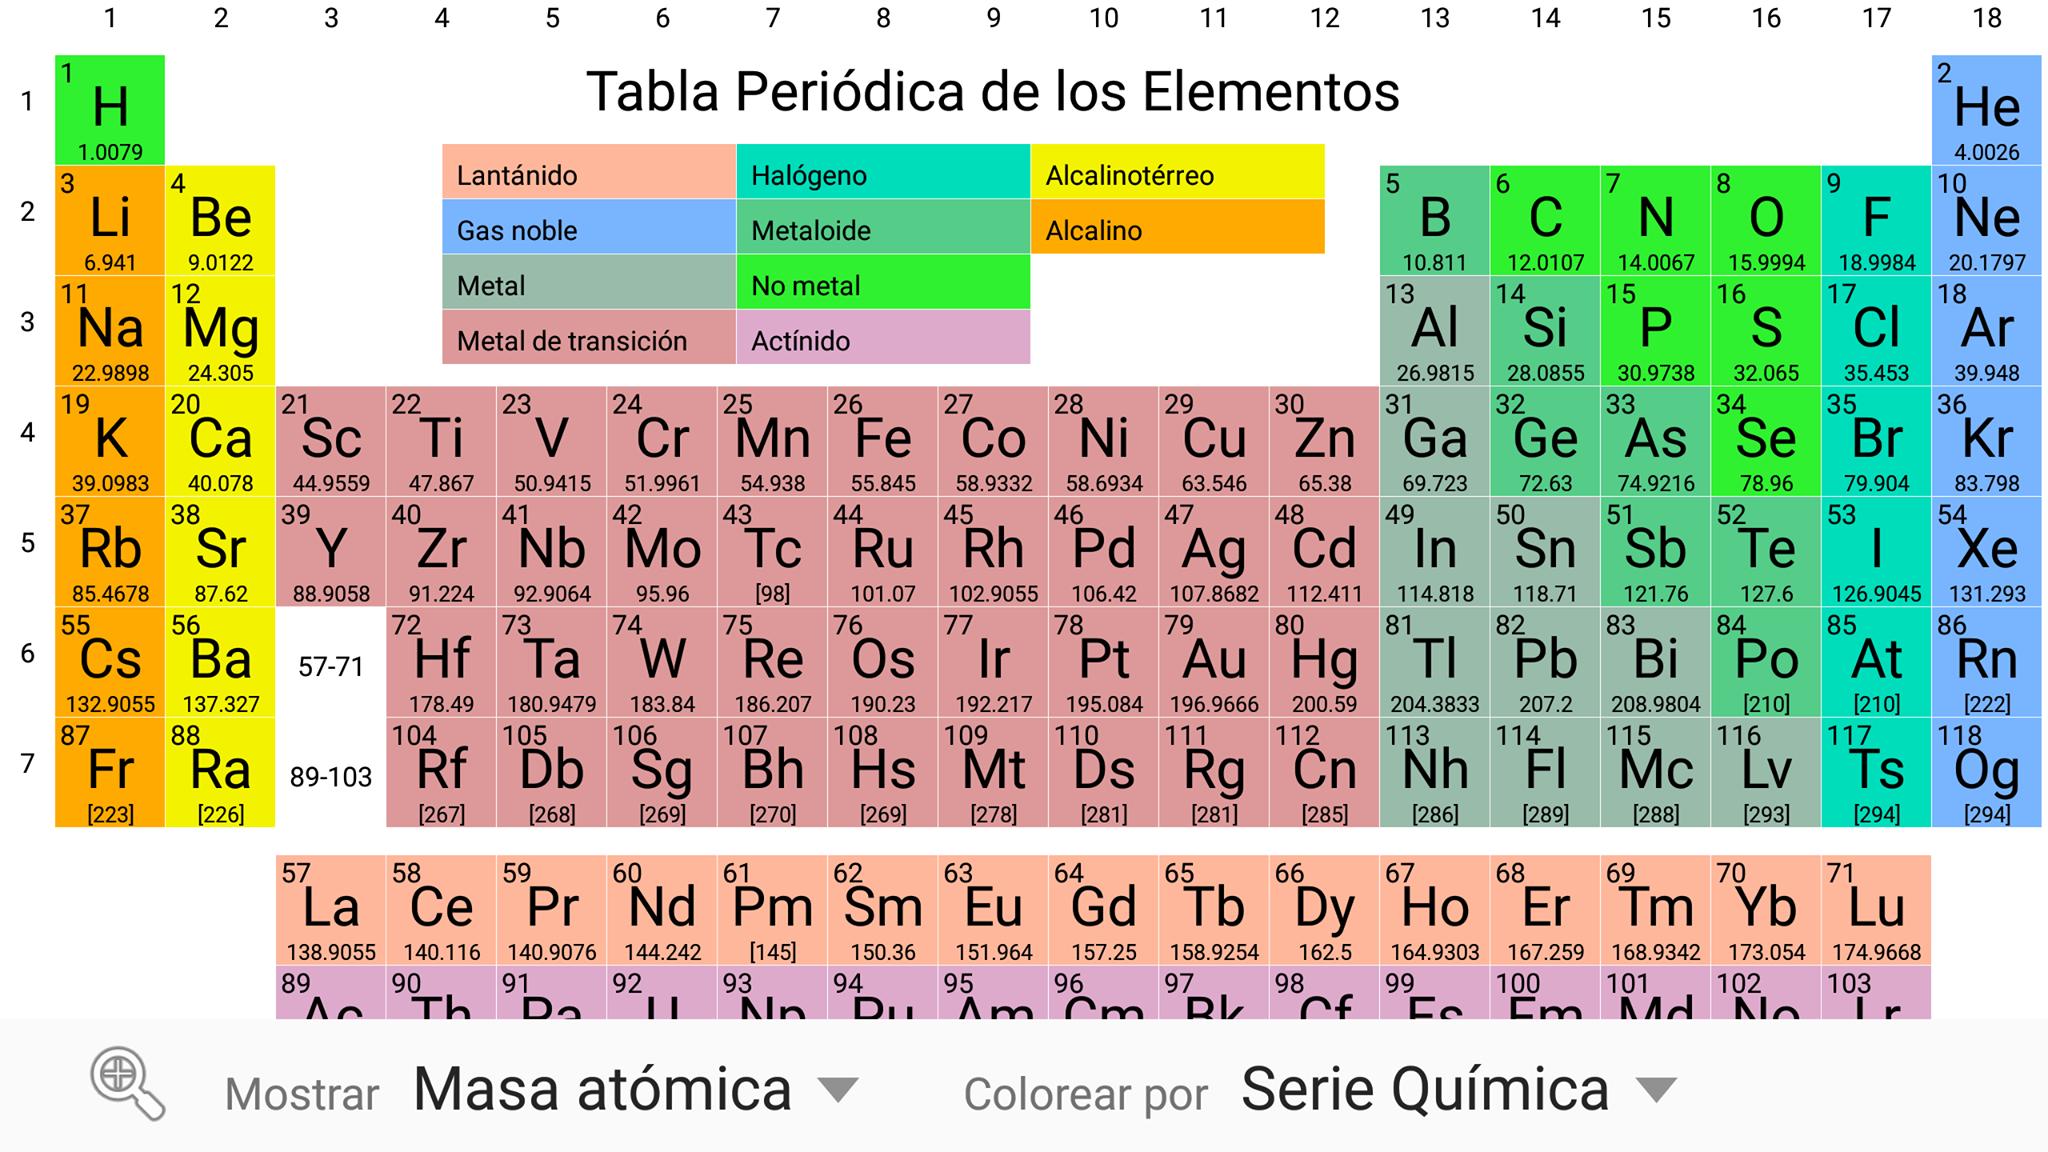 Span elements